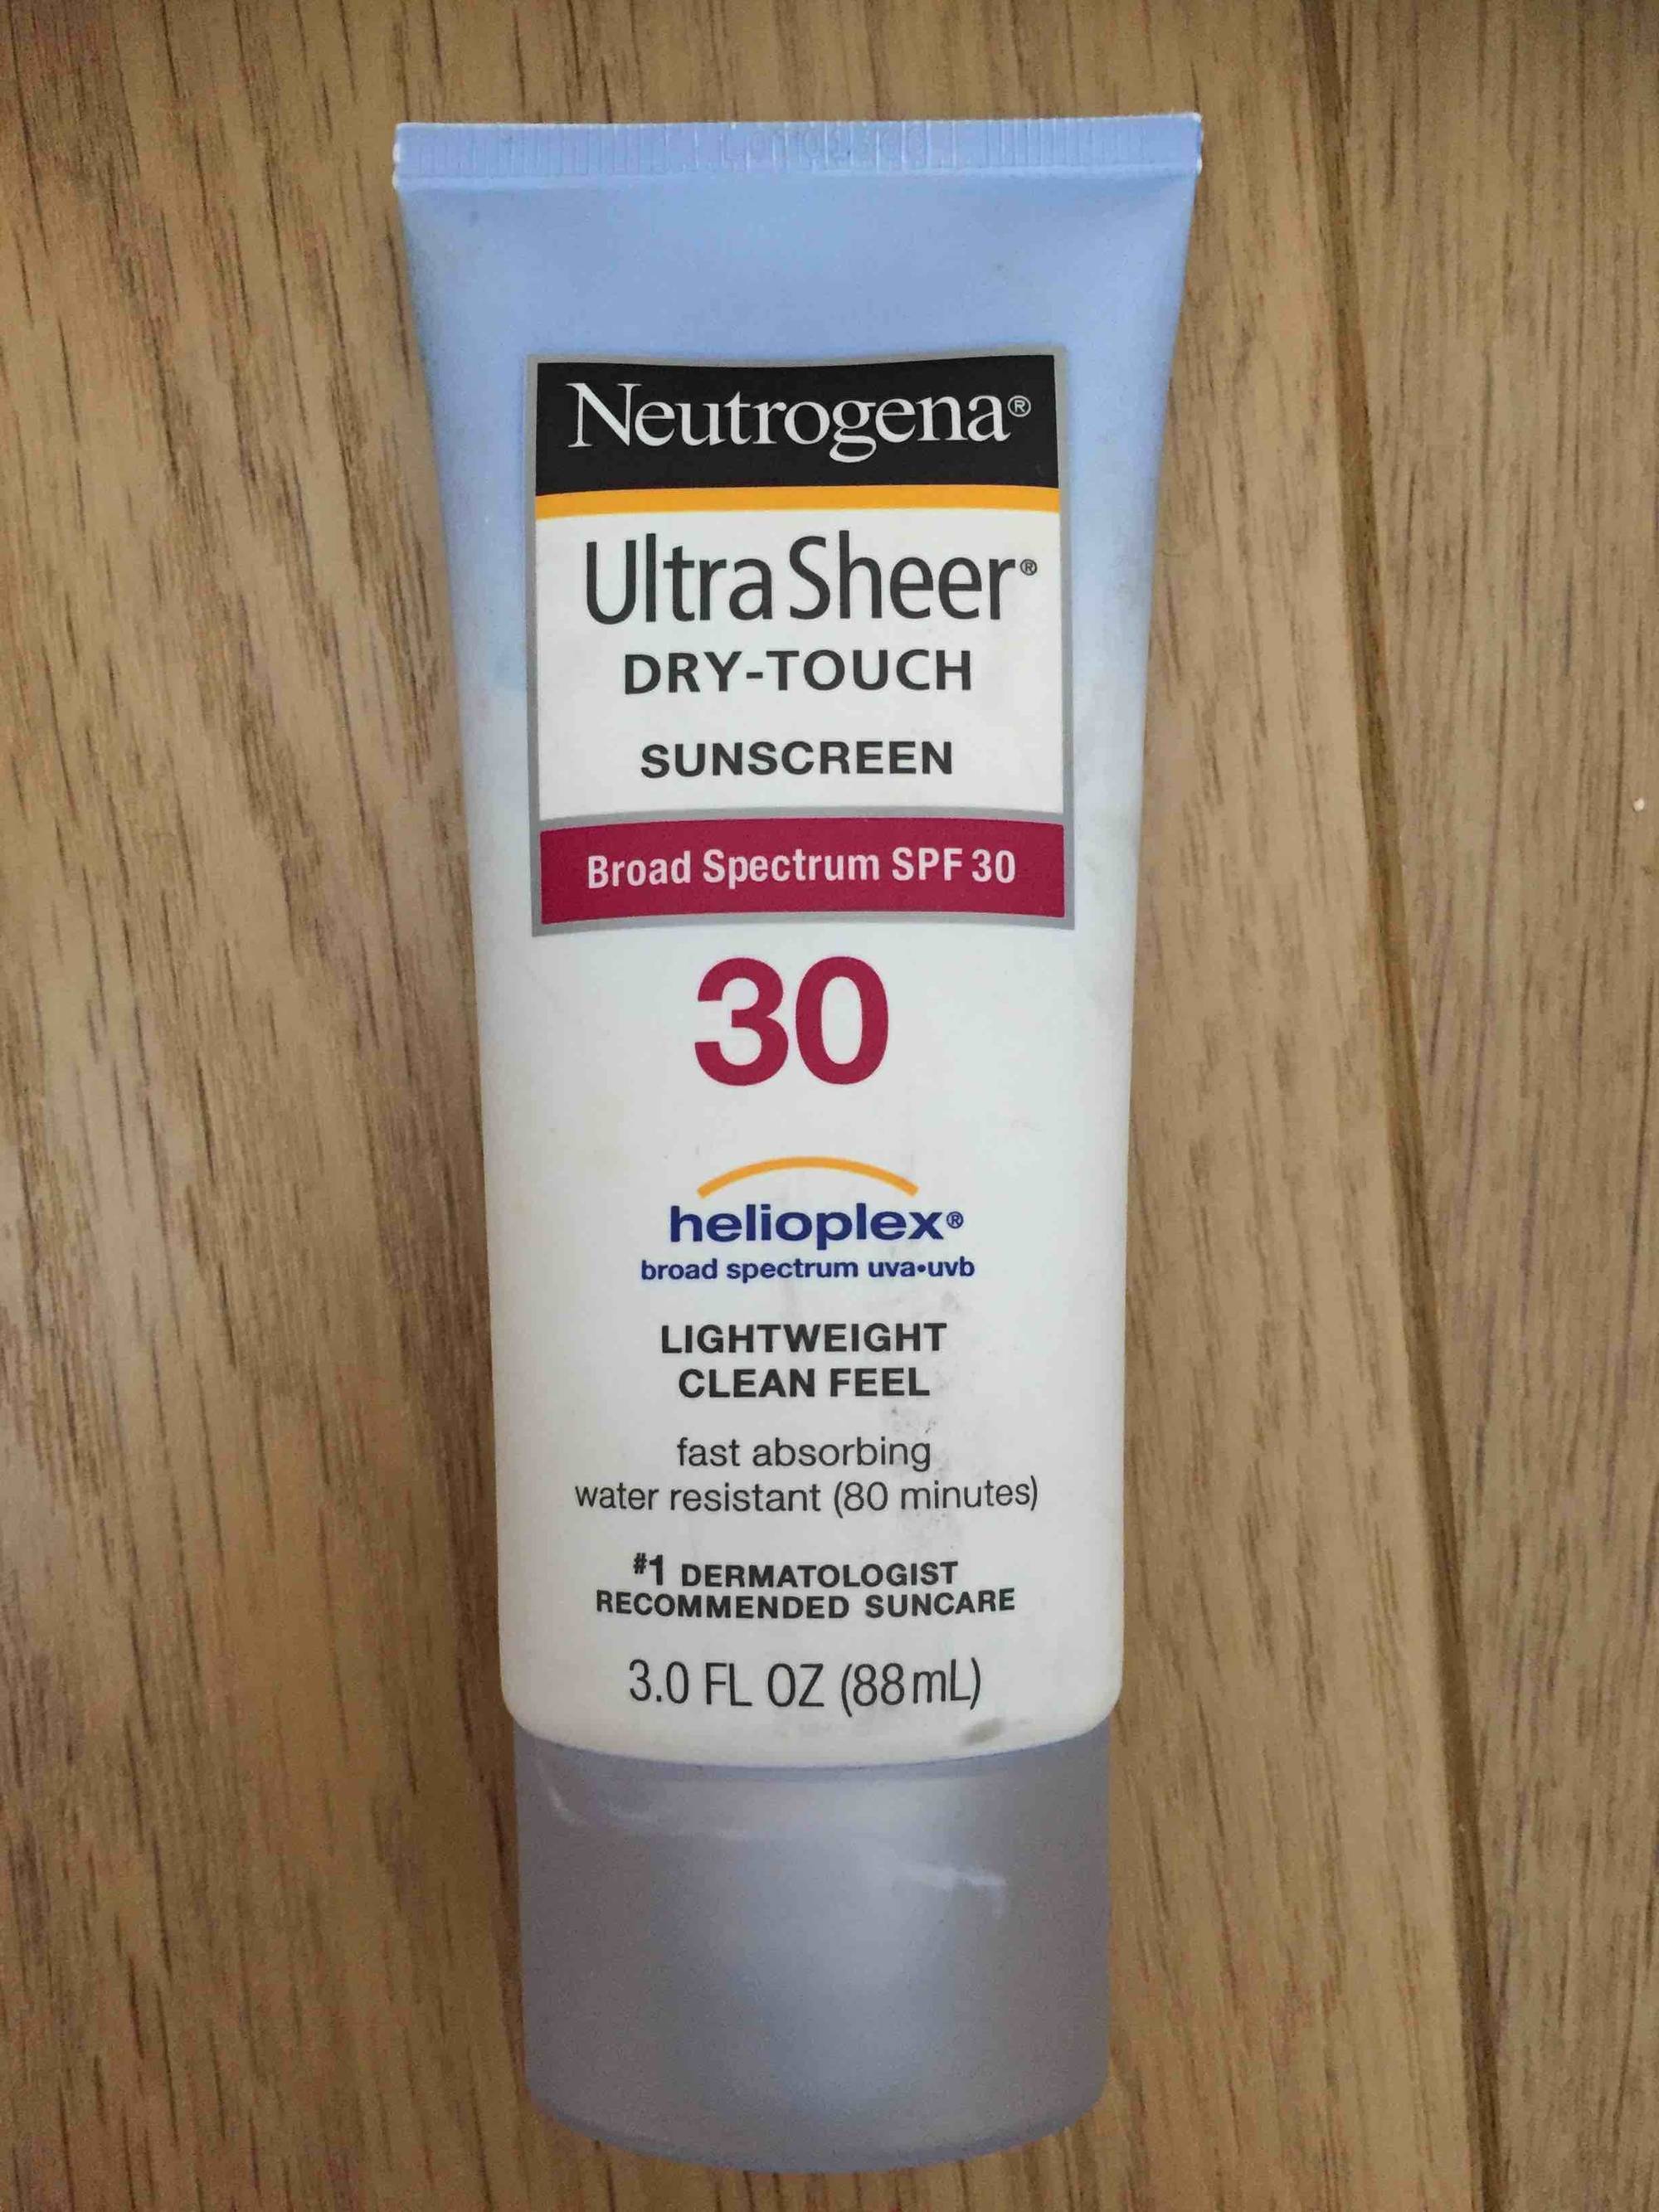 NEUTROGENA - Ultra Sheer -Dry-touch sunscreen SPF 30